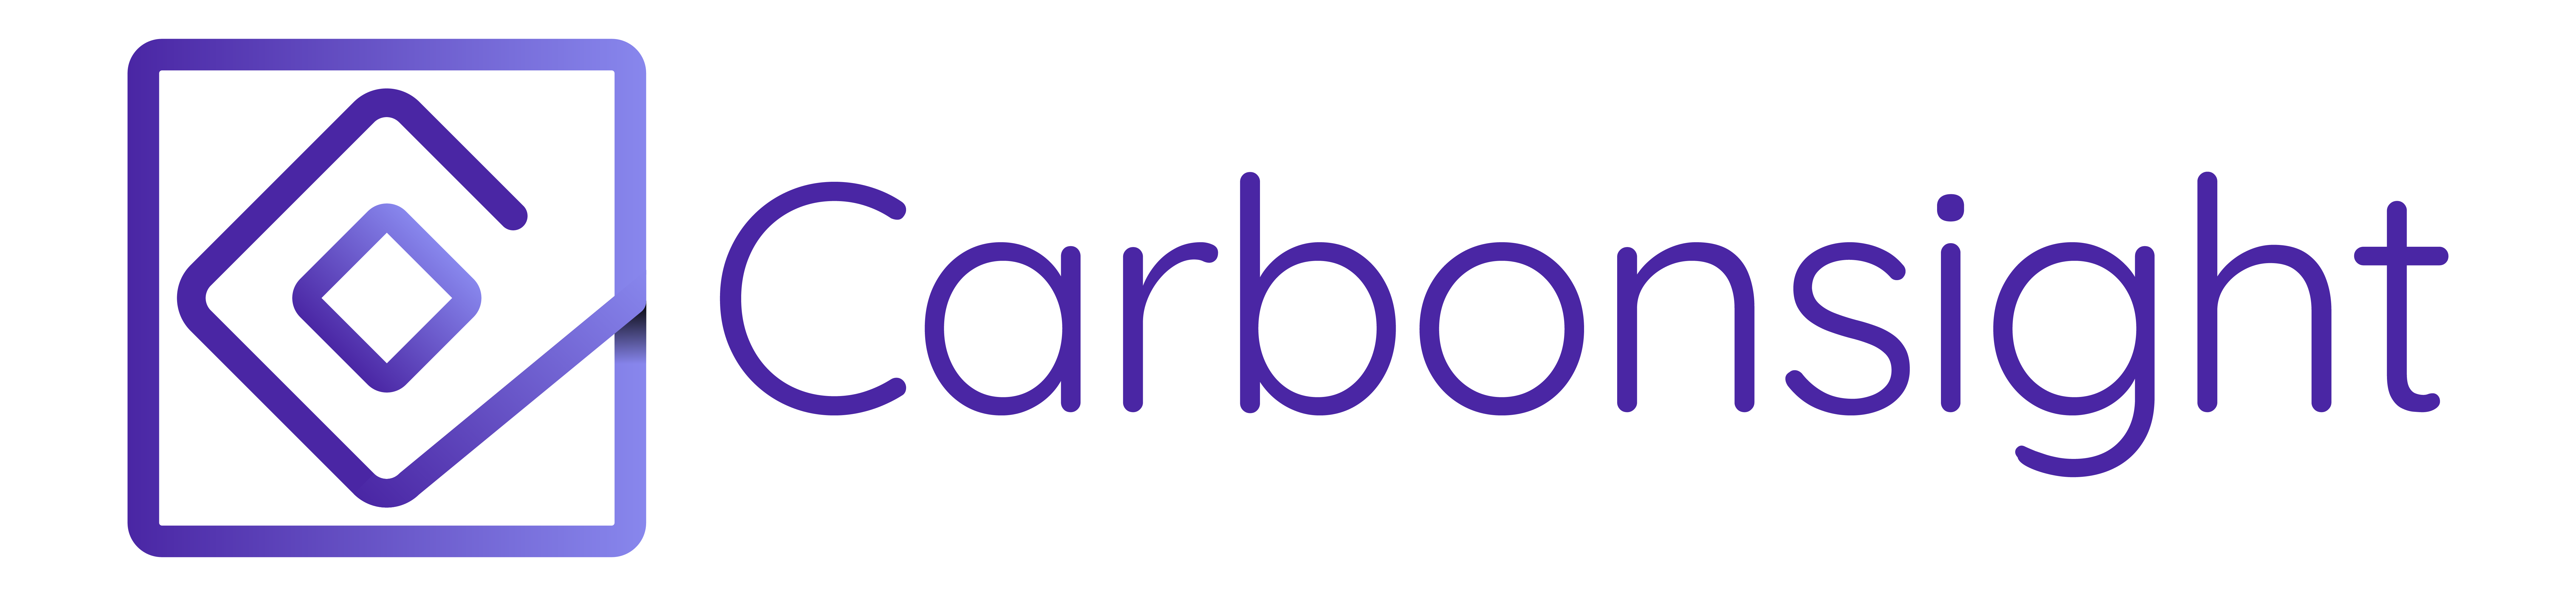 Carbonsight Logo Registered Beta